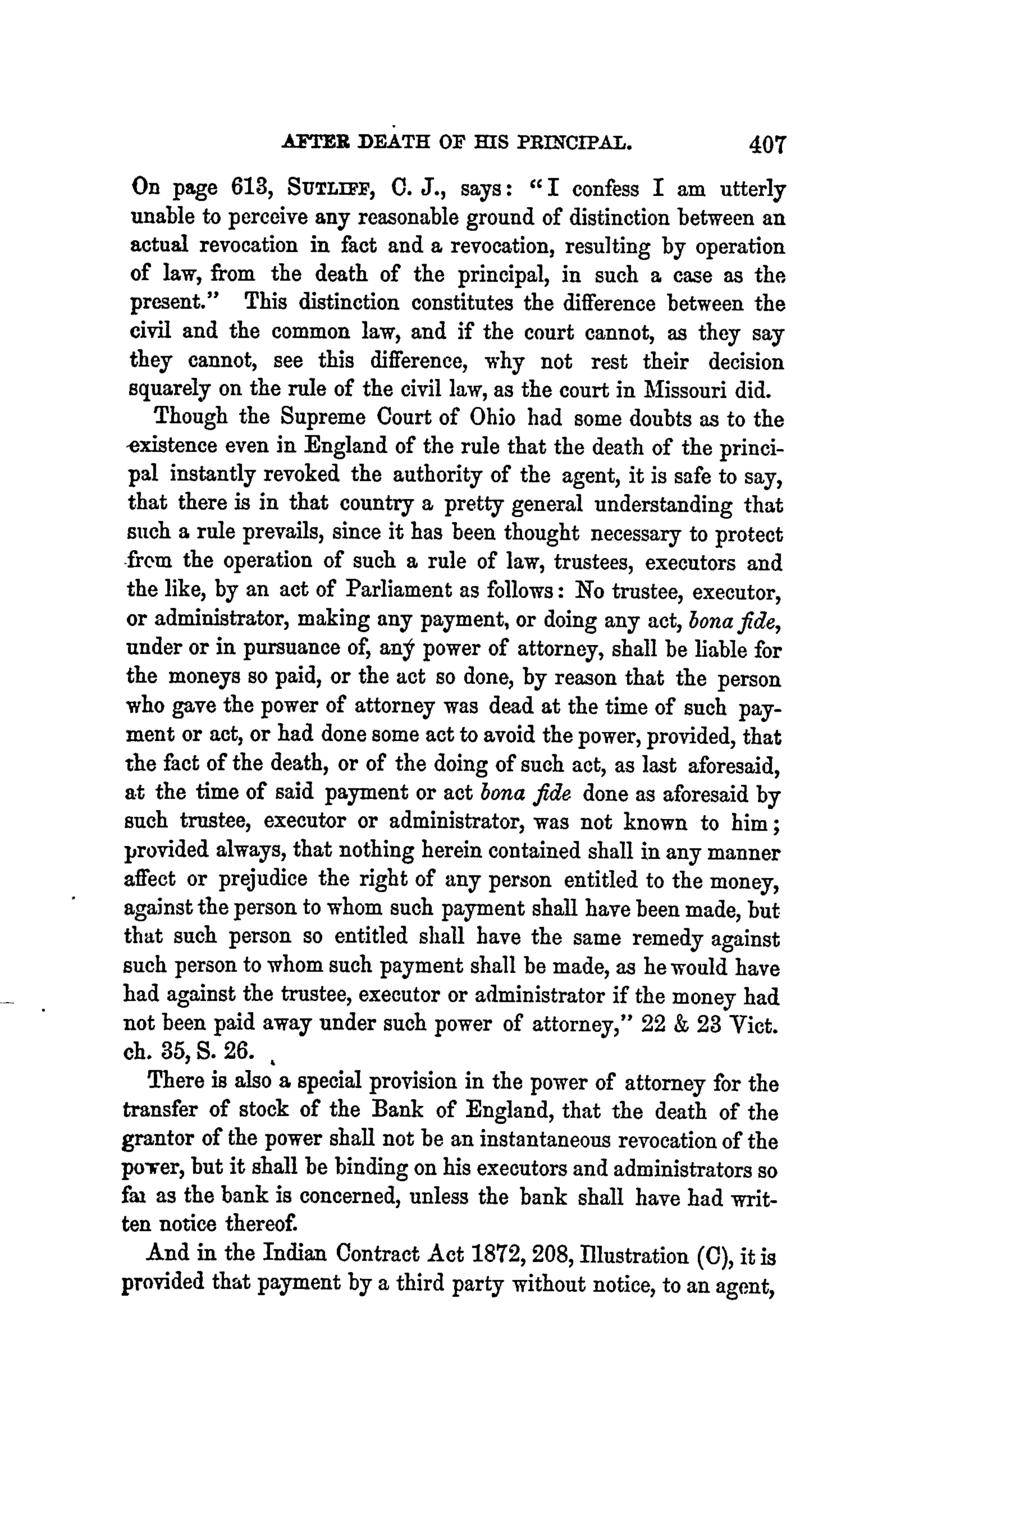 A"TER DEATH OF HIS PRINCIPAL. On page 613, SUTLIFF, C. J.